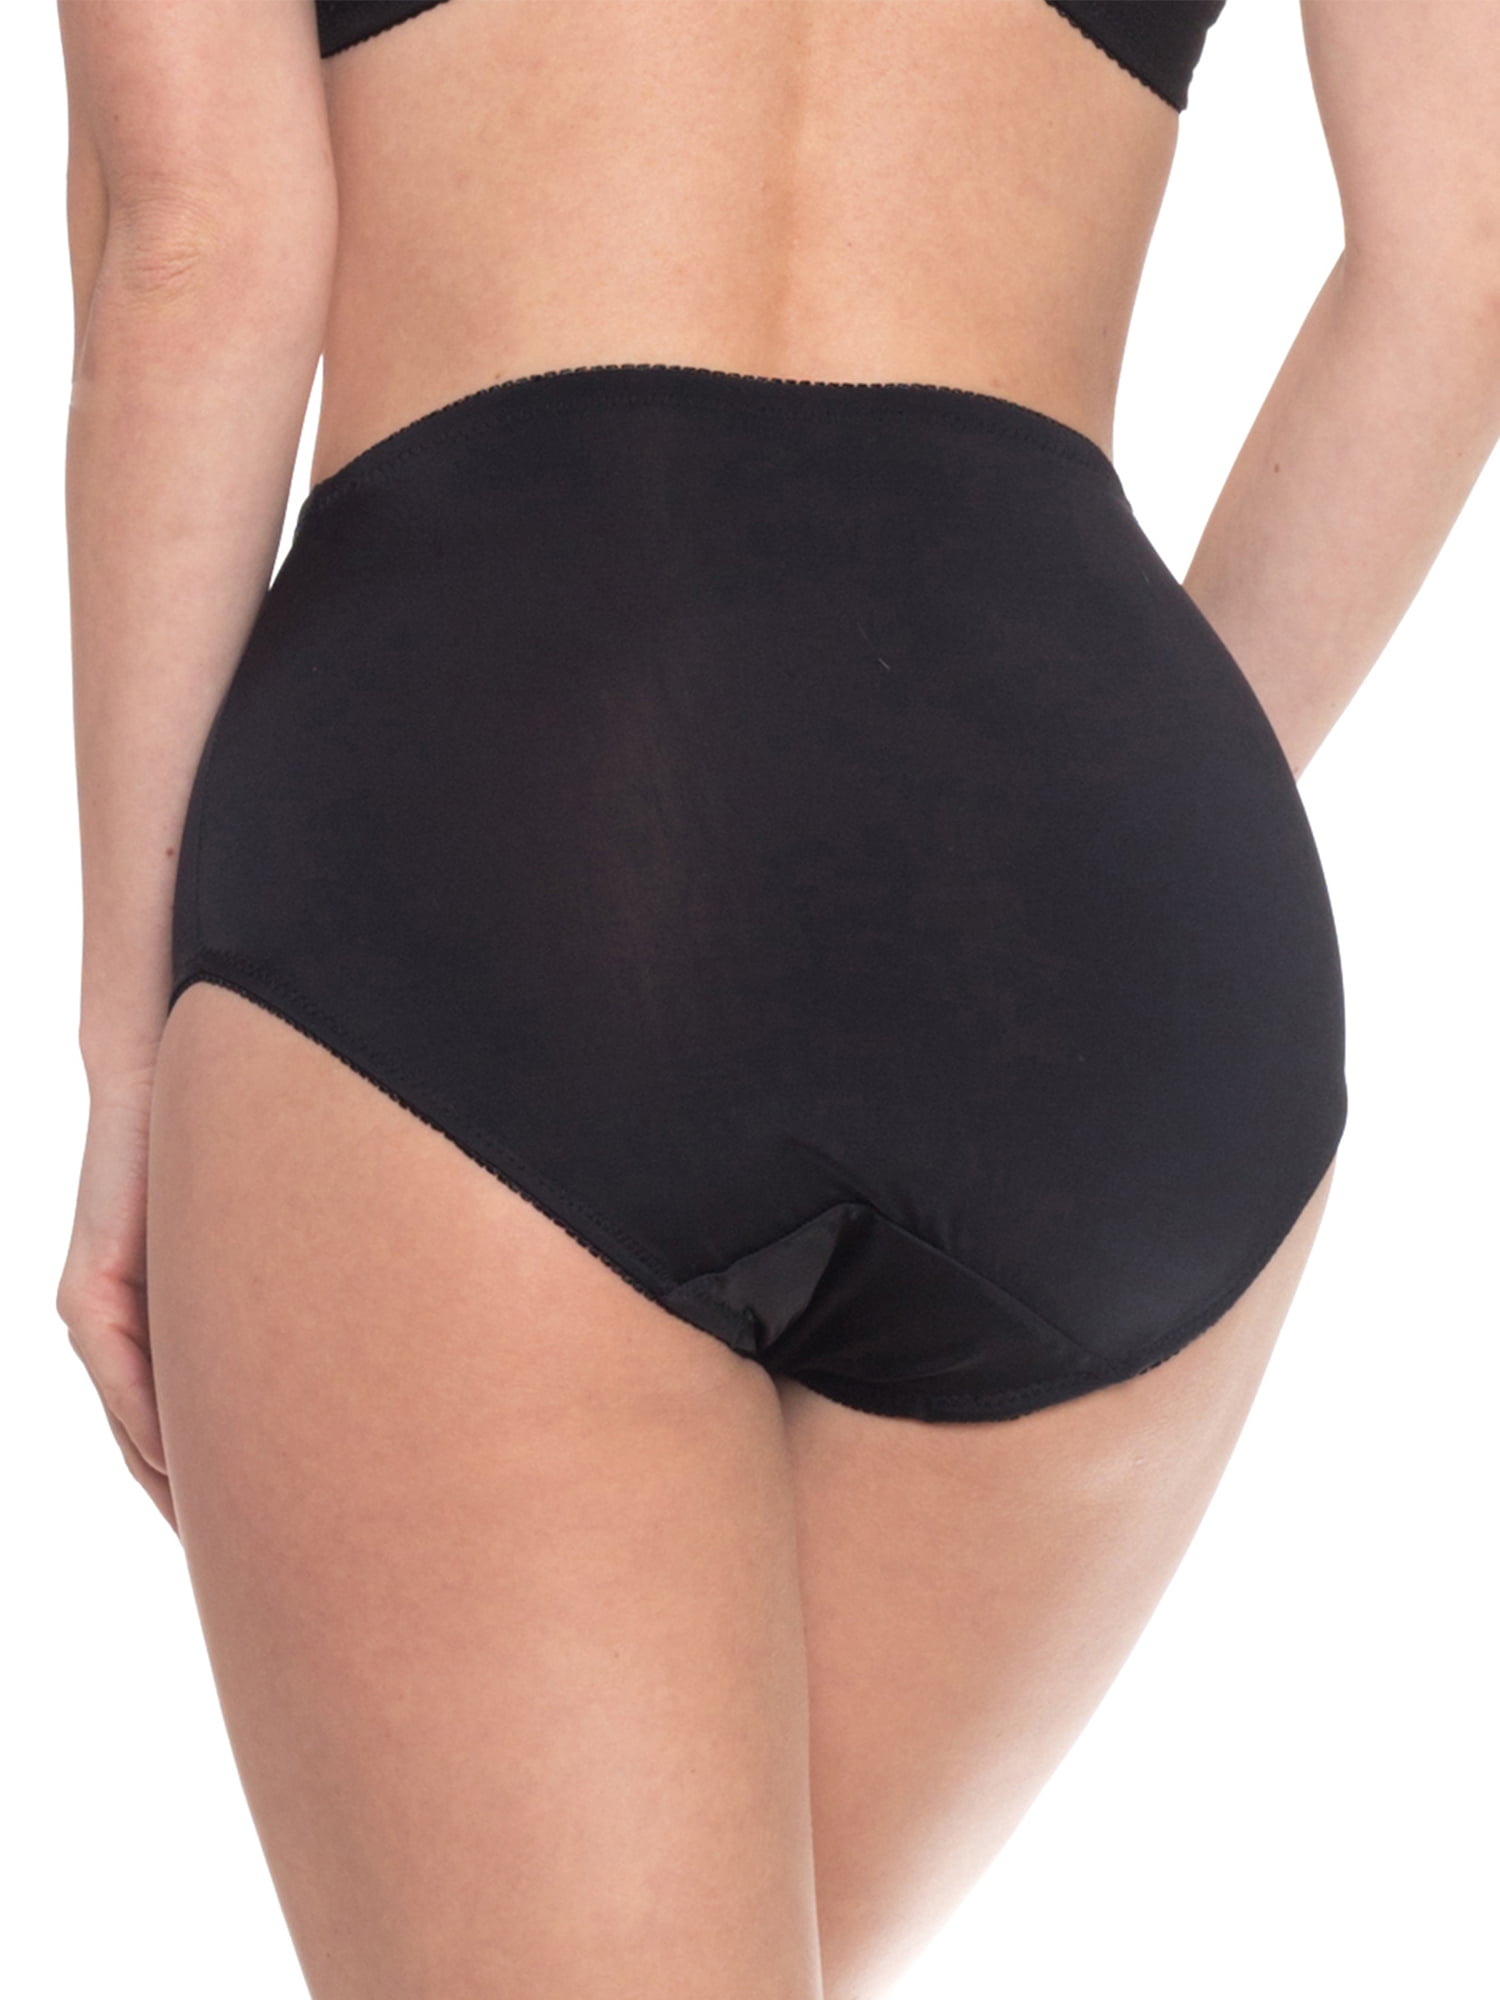 B2BODY Cotton Underwear Women - Boyshort Panties for Women Small to Plus  Size 5 Pack, 5 Pack Cheeky Boyshorts (Shadow), L price in UAE,  UAE